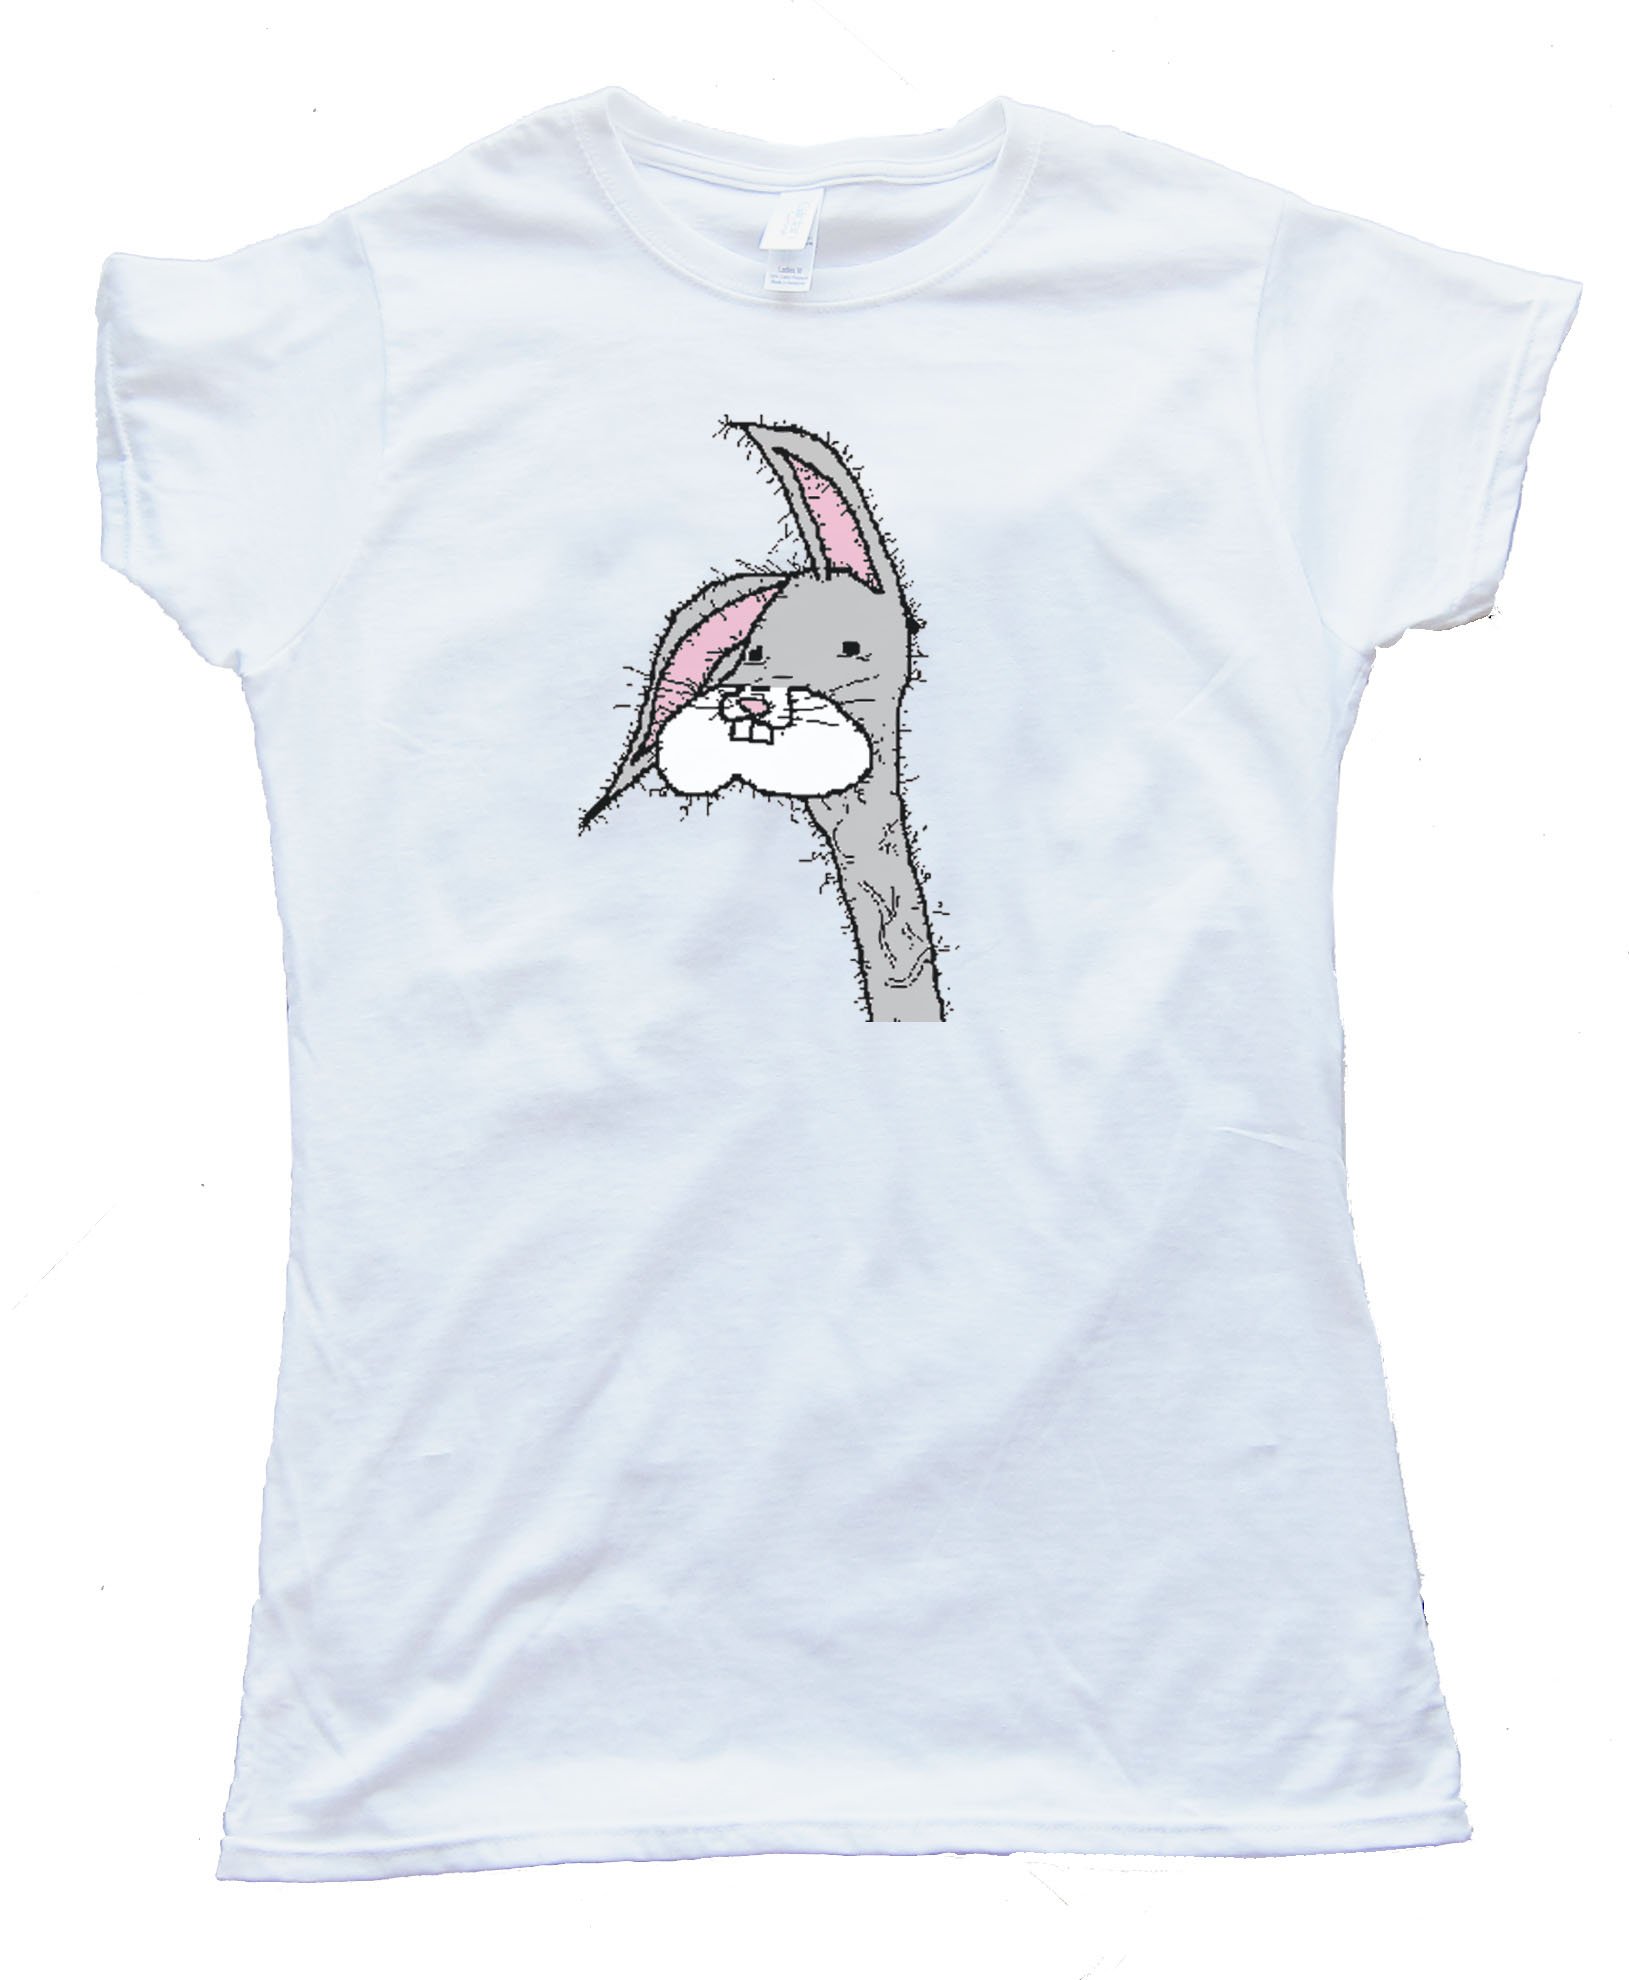 Womens Bogs Bunny - Bugs Bunny - Tee Shirt